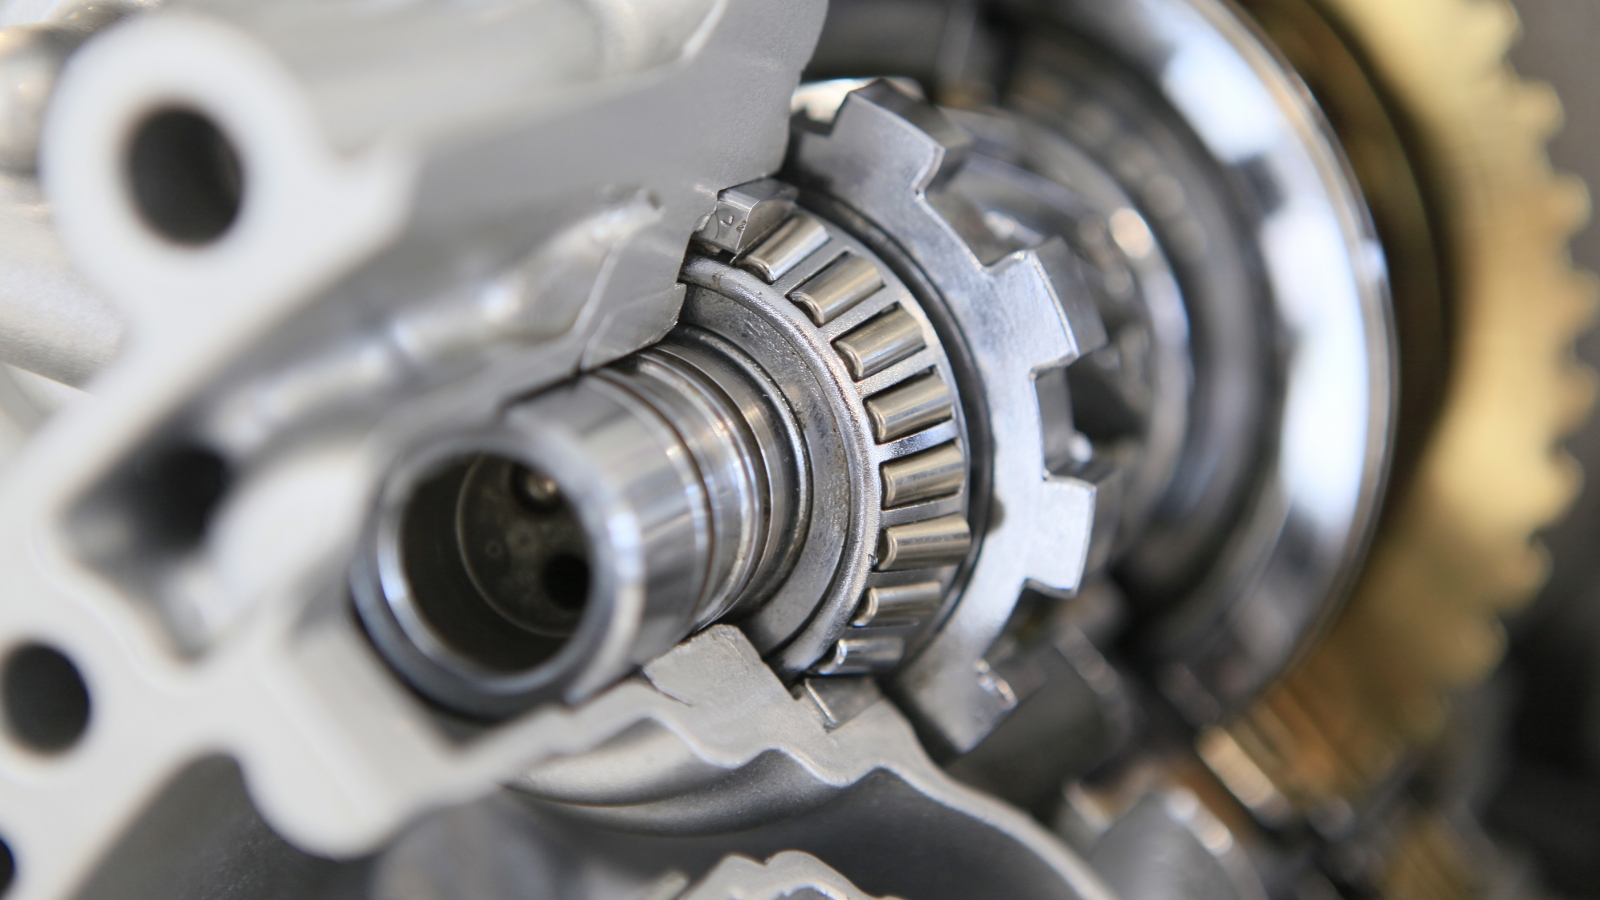 Gears of an engine